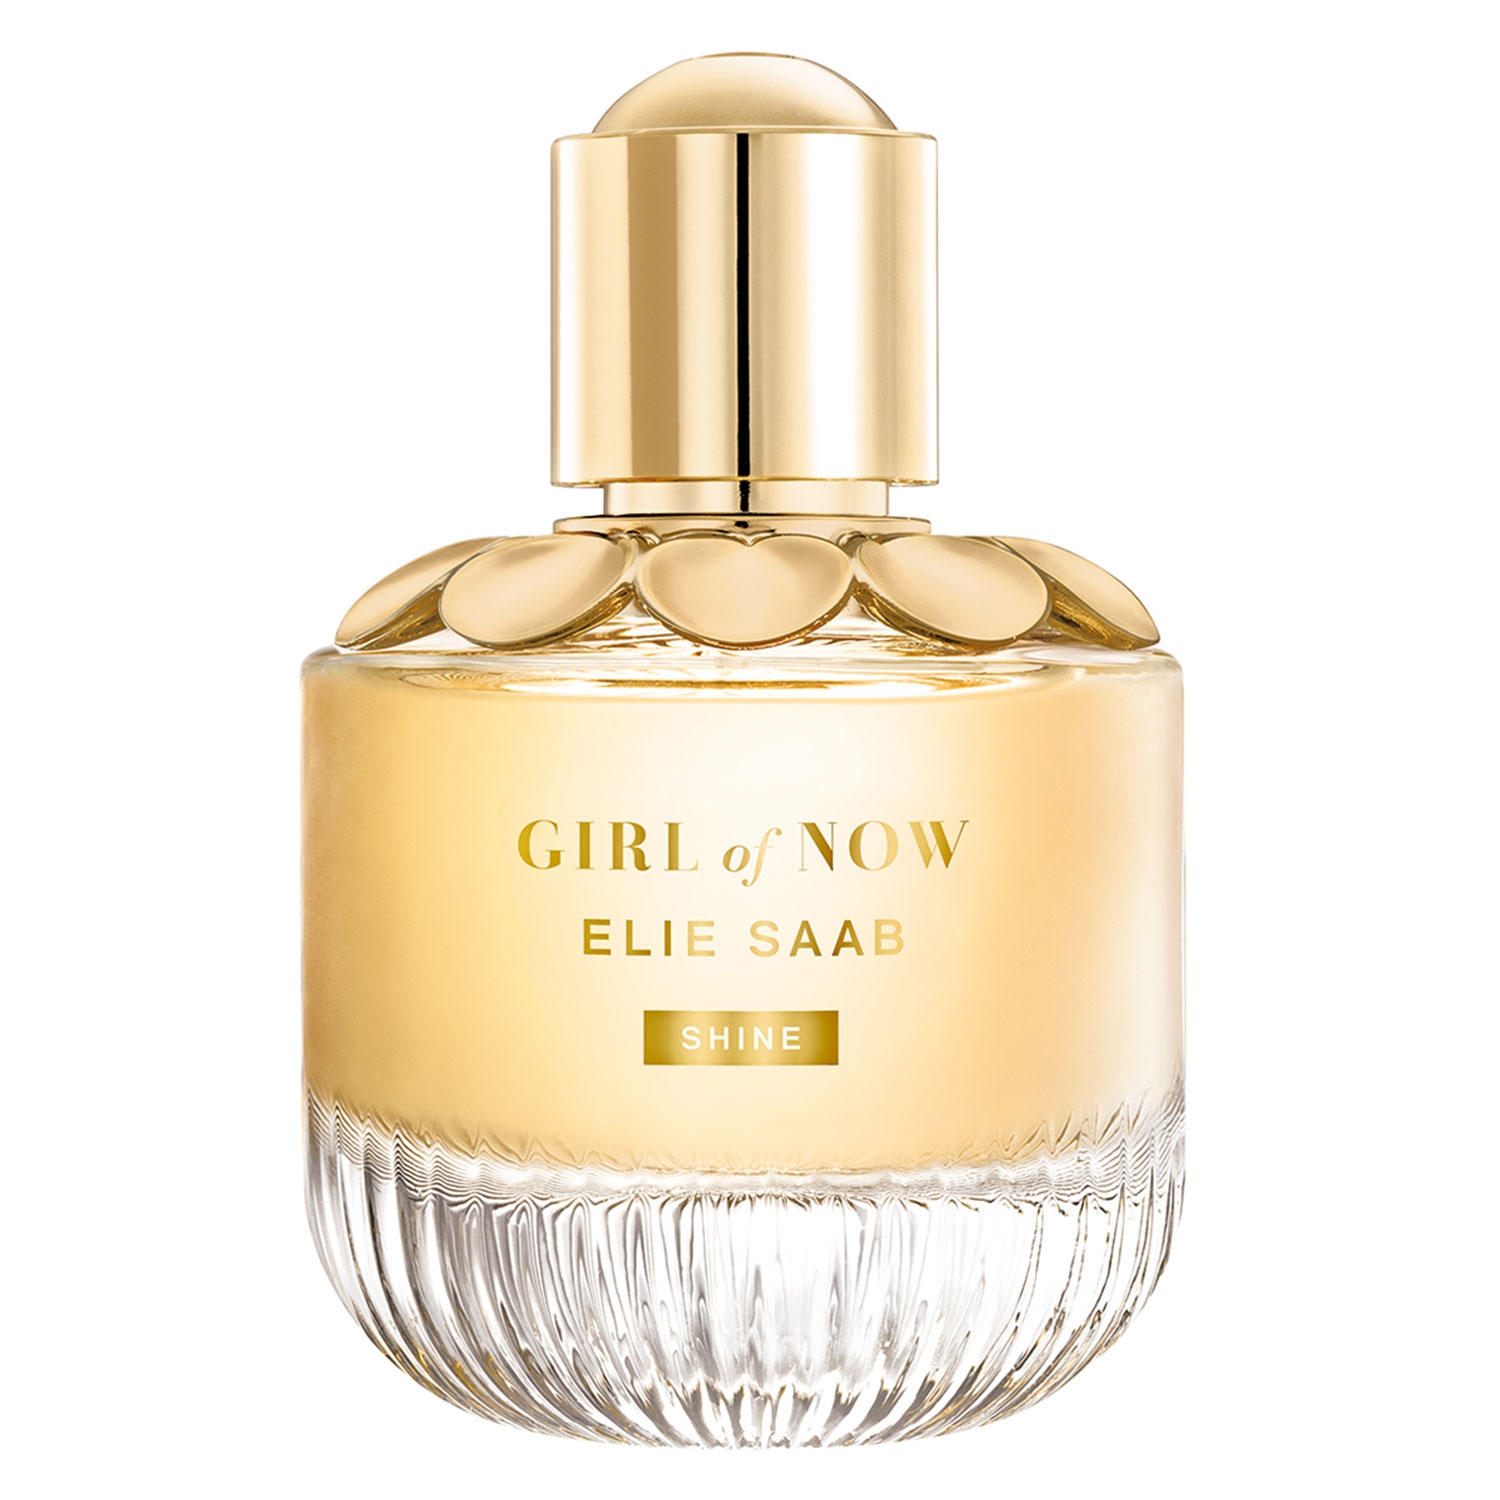 Produktbild von Girl of Now - Shine Eau de Parfum